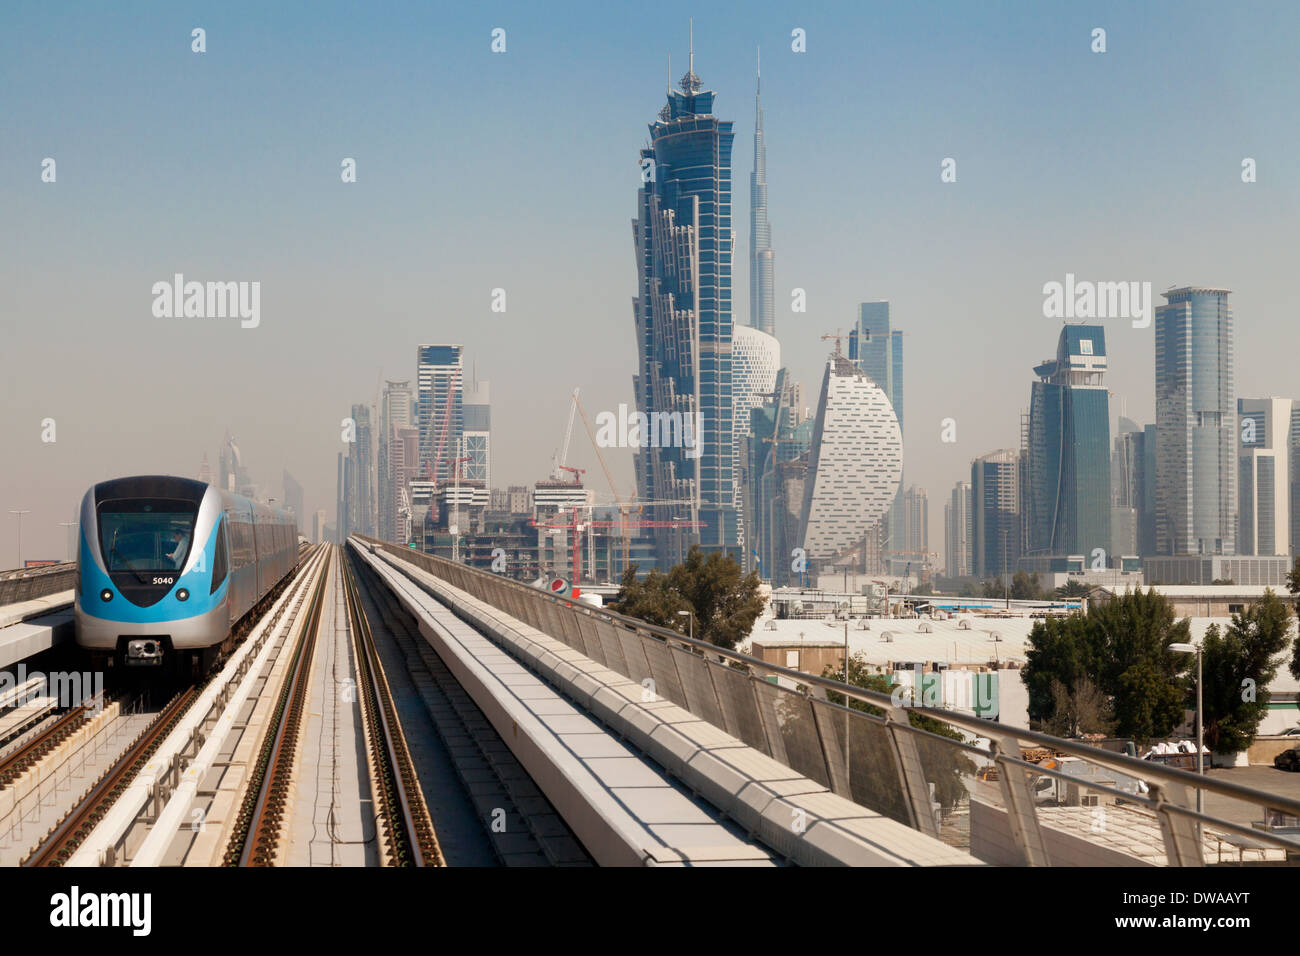 A train on the Dubai Metro with skyscrapers on the skyline including the Burj Khalifa; Dubai, UAE, Middle East Stock Photo